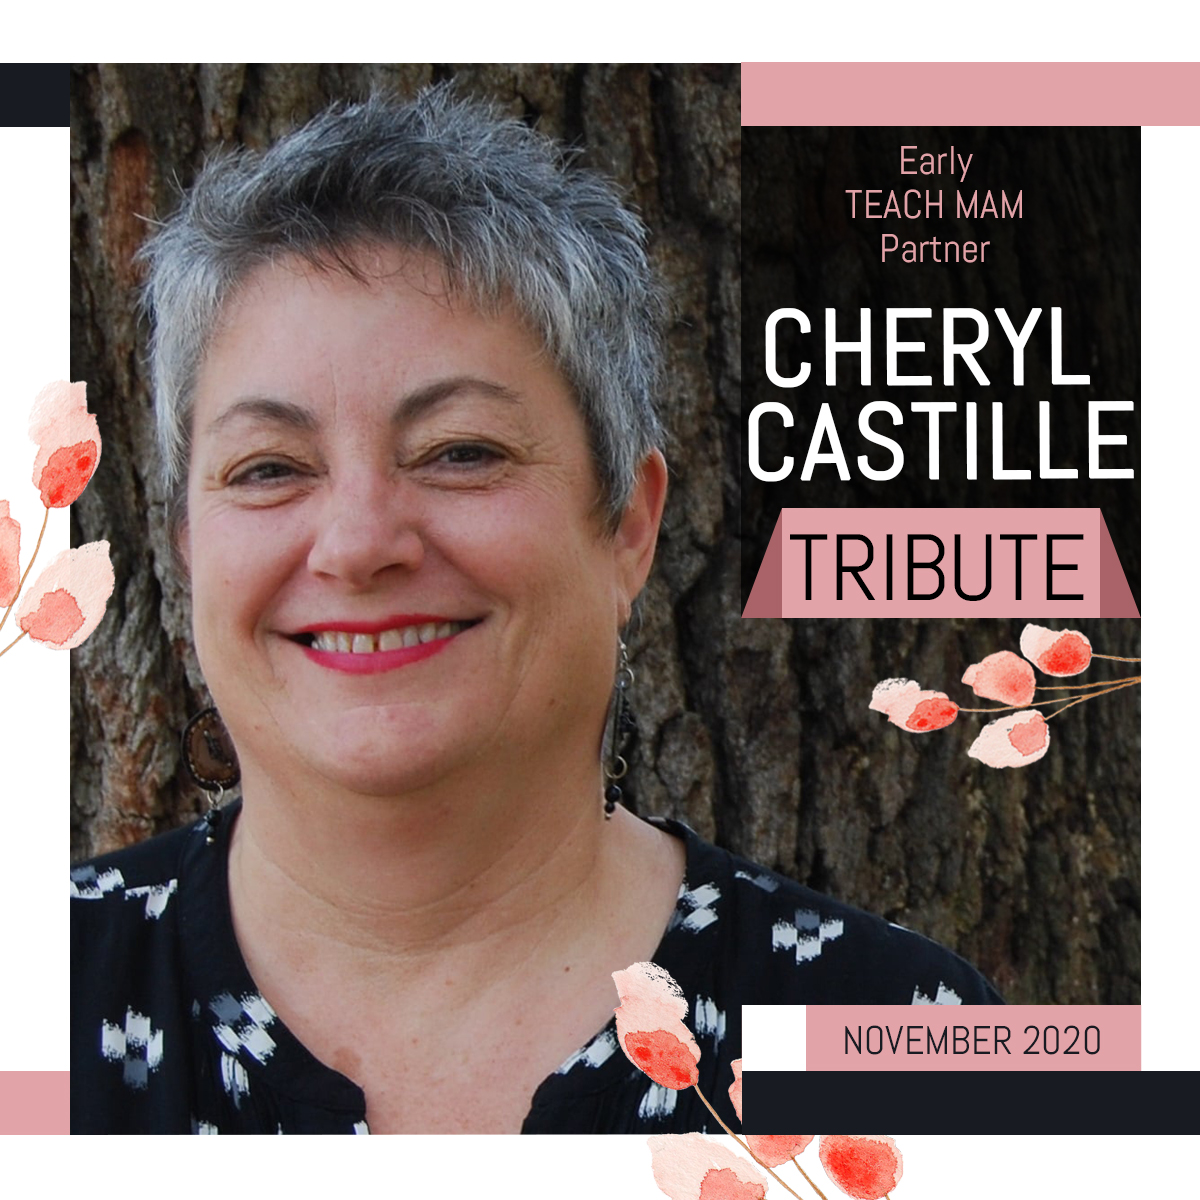 A Tribute to an Early Teach MAM Partner Cheryl Castille